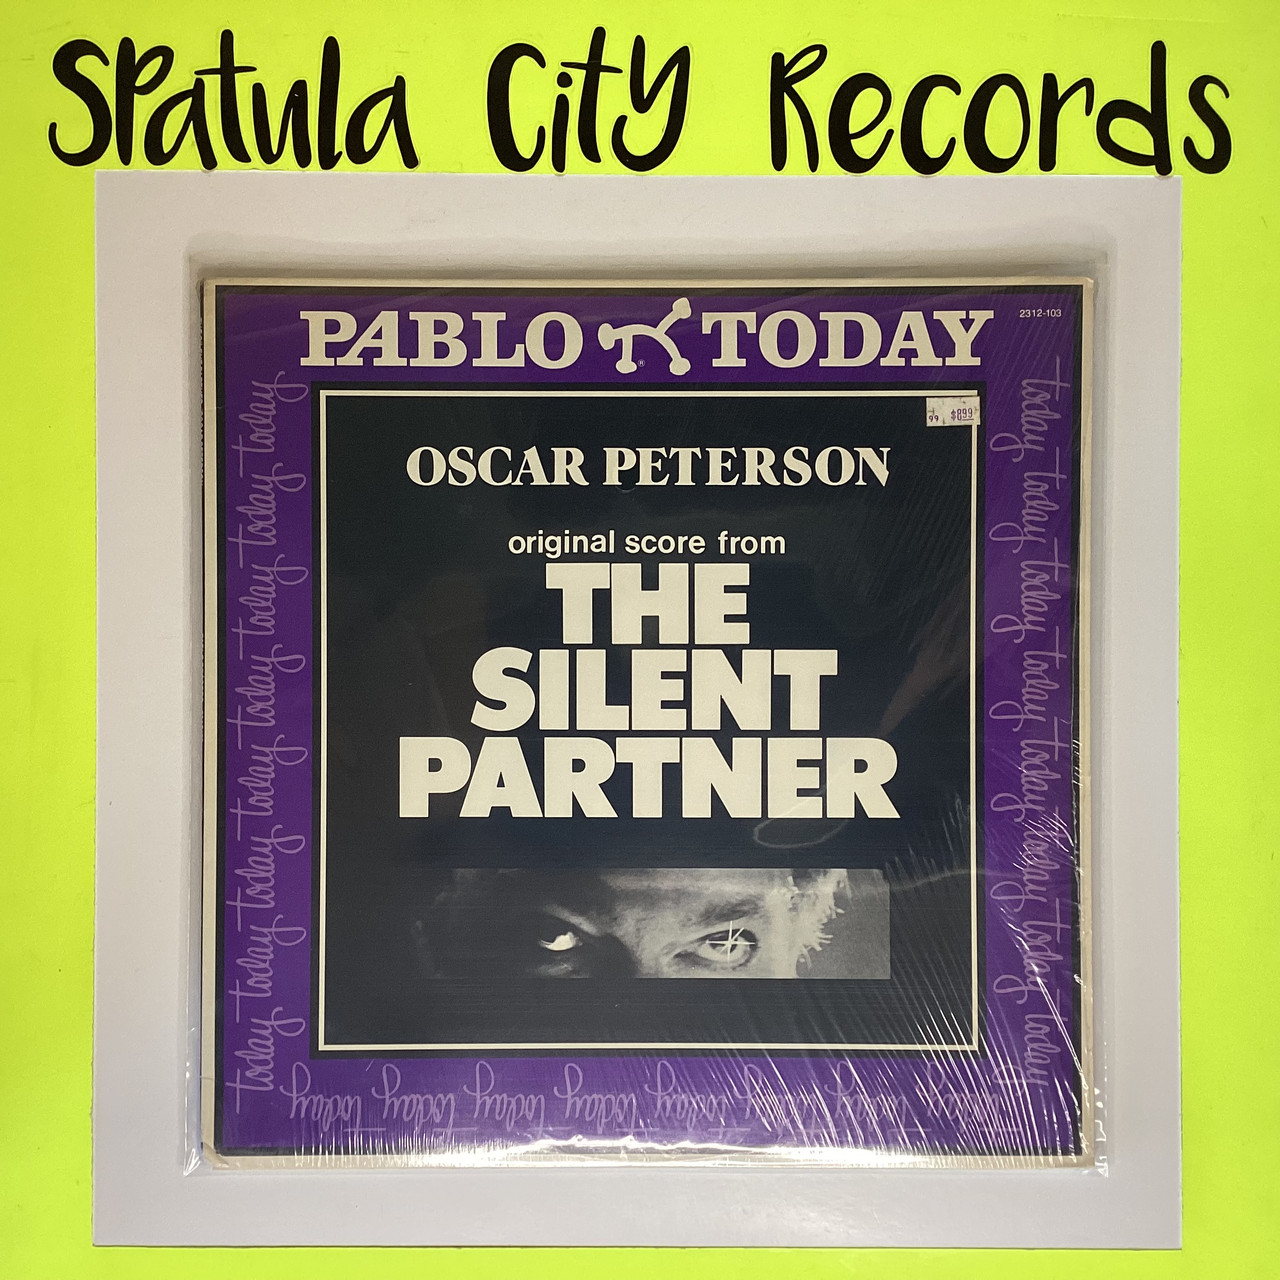 Oscar Peterson - Silent Partner - soundtrack - vinyl record LP